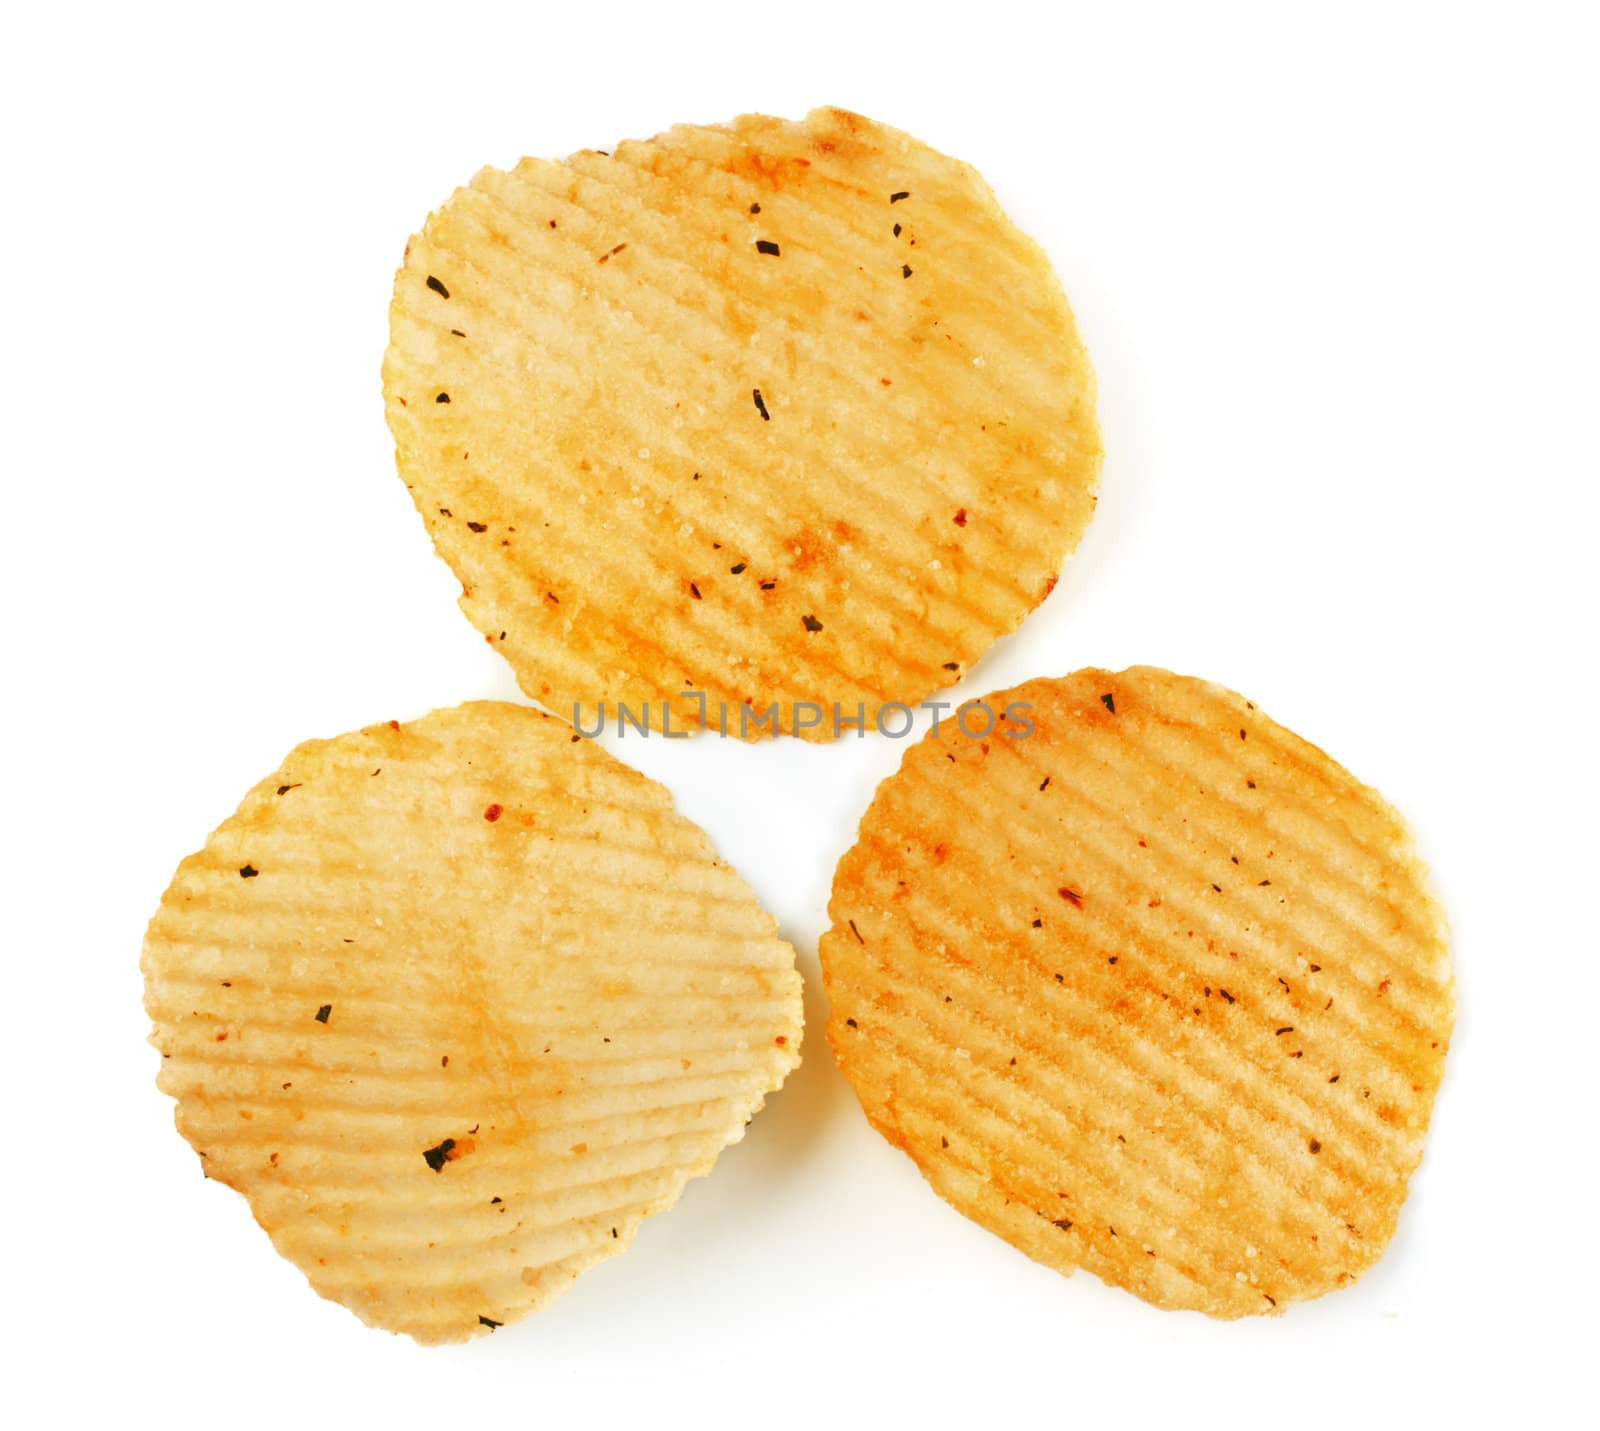 potato chips by petr_malyshev